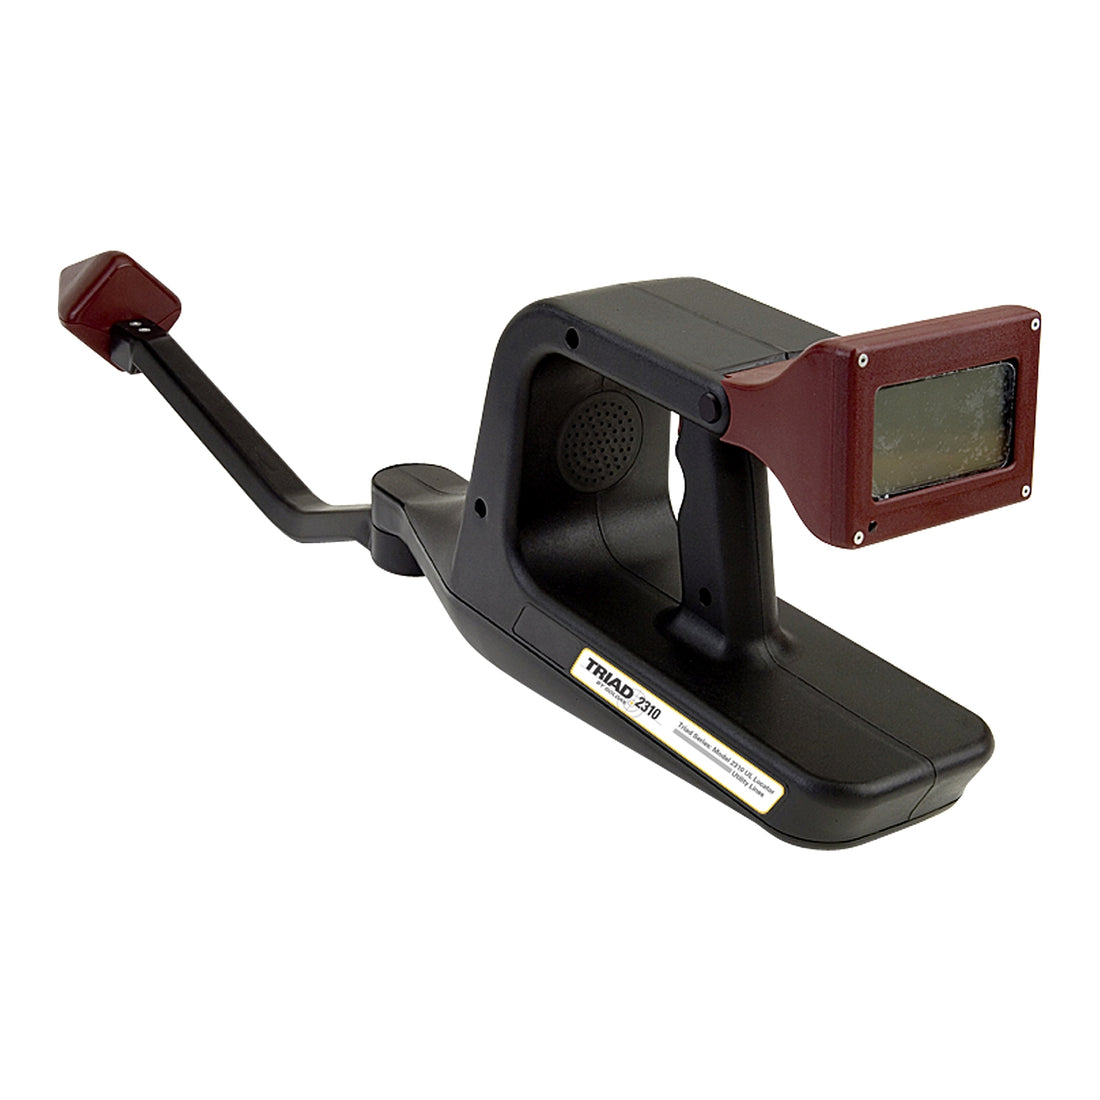 Goldak TRIAD 2310-SC Camera and Sonde Locator with Carry Case